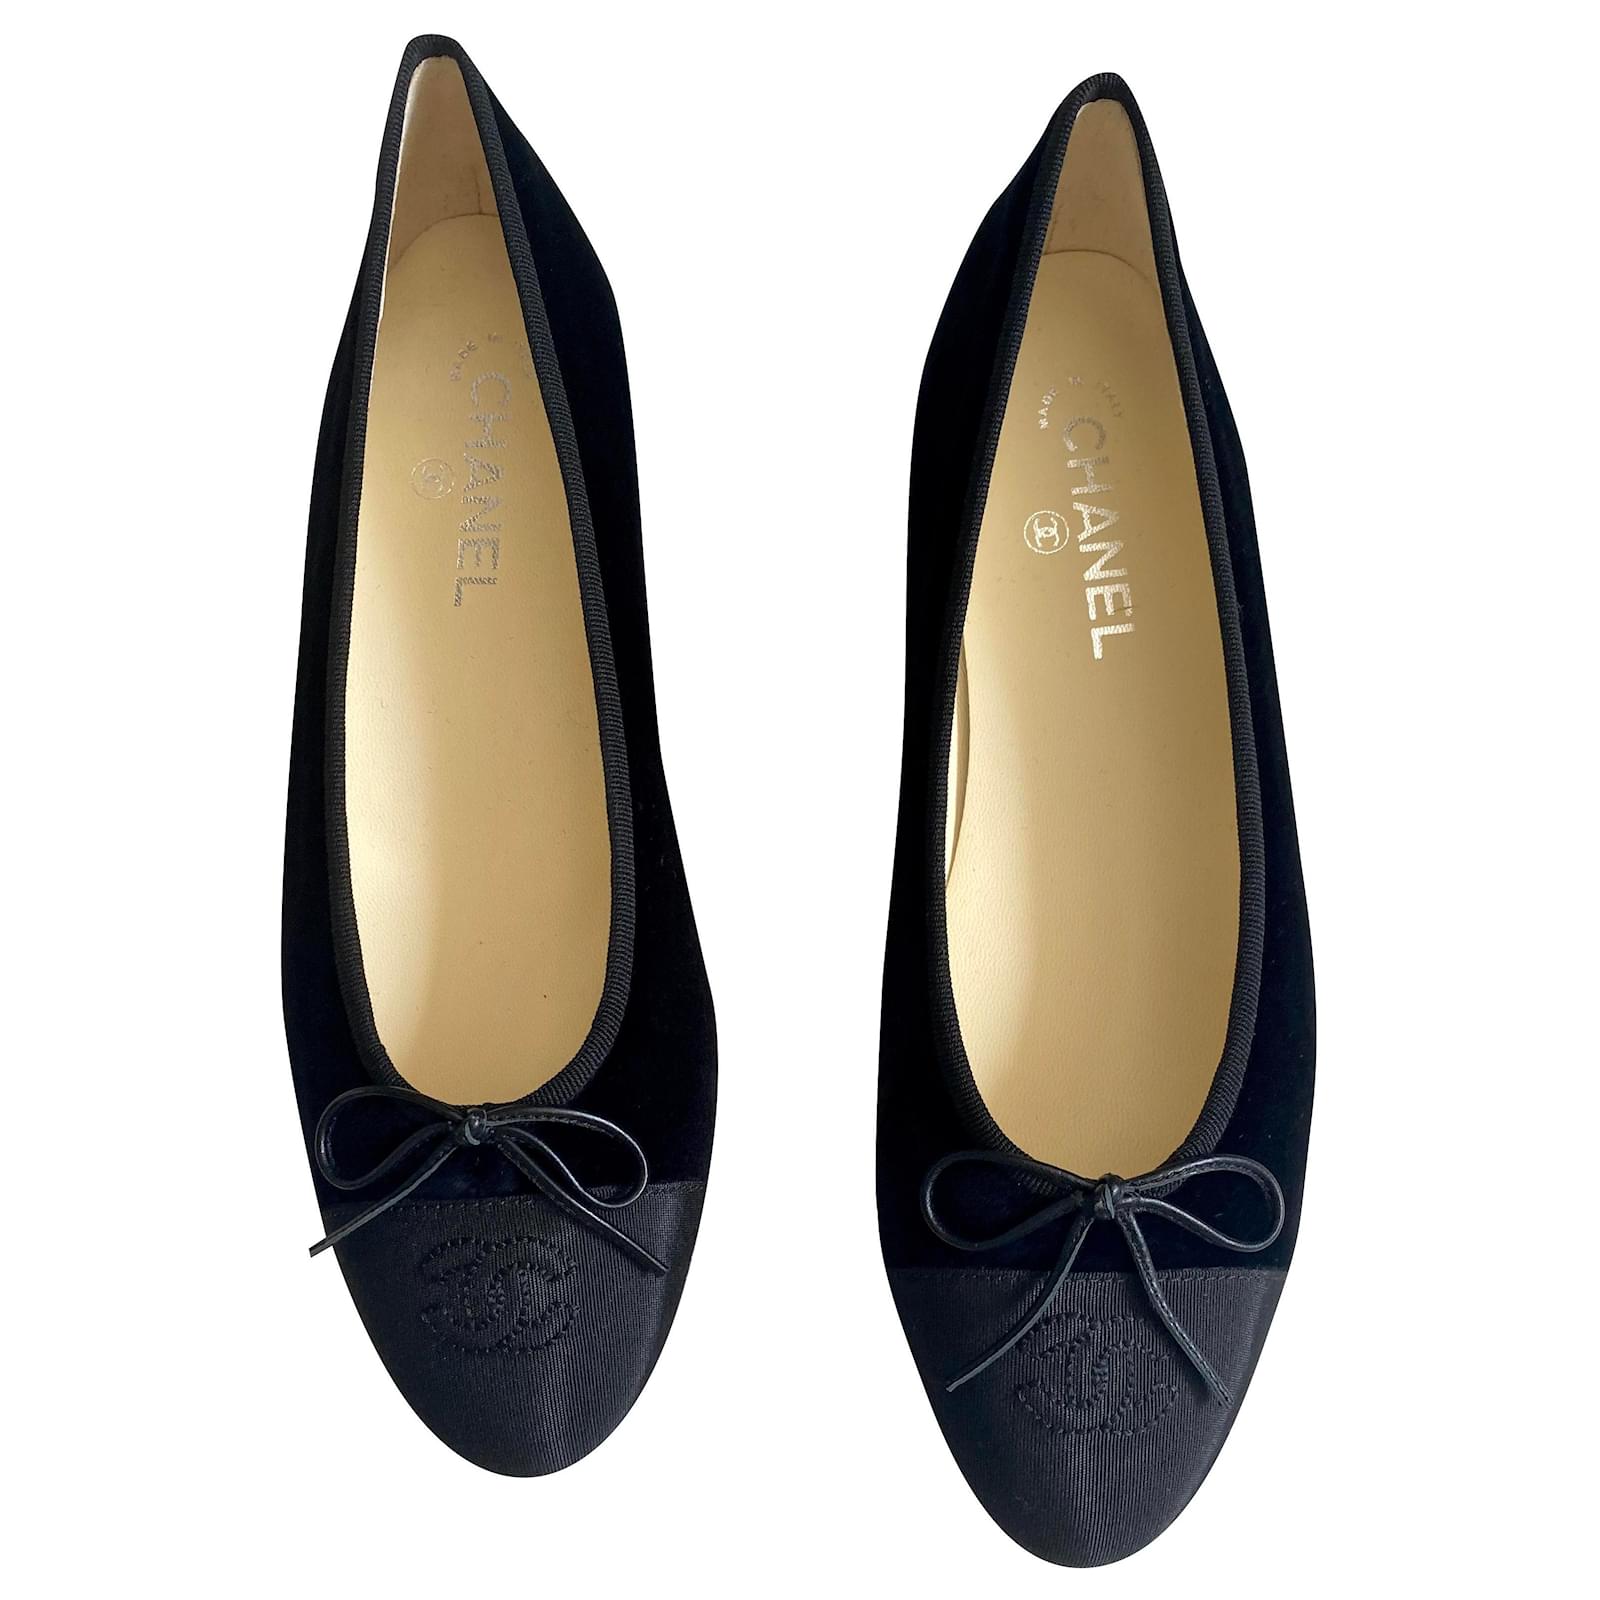 Sold at Auction: Chanel Black CC Ballet Flat - Size 41